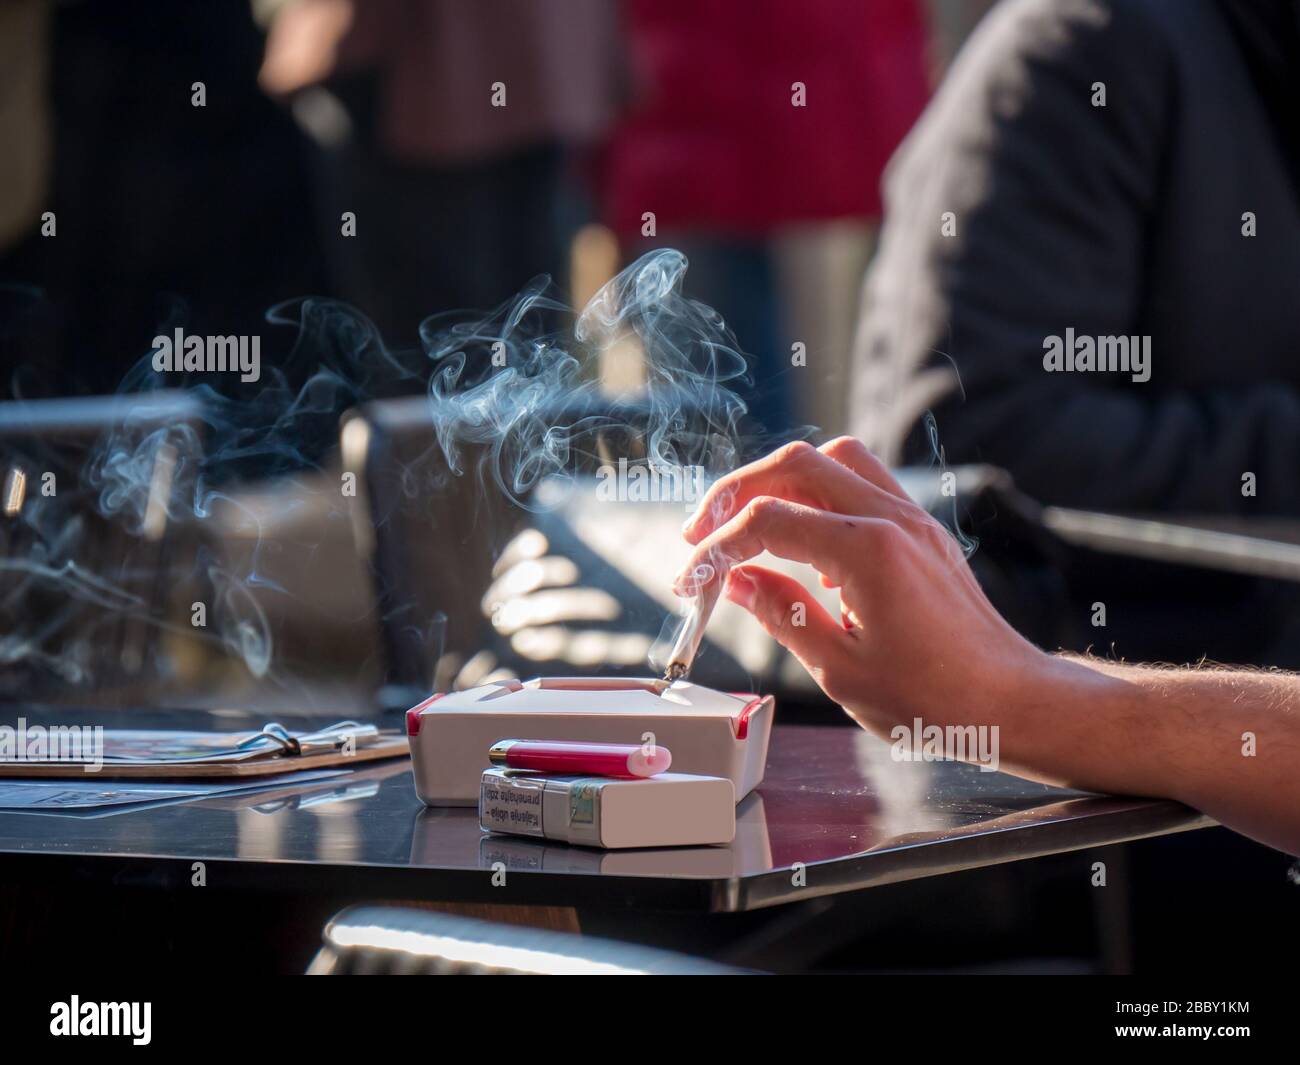 Woman hand holding cigarette with smoke at table. Smoking nicotine addiction unhealthy lifestyle. Stock Photo